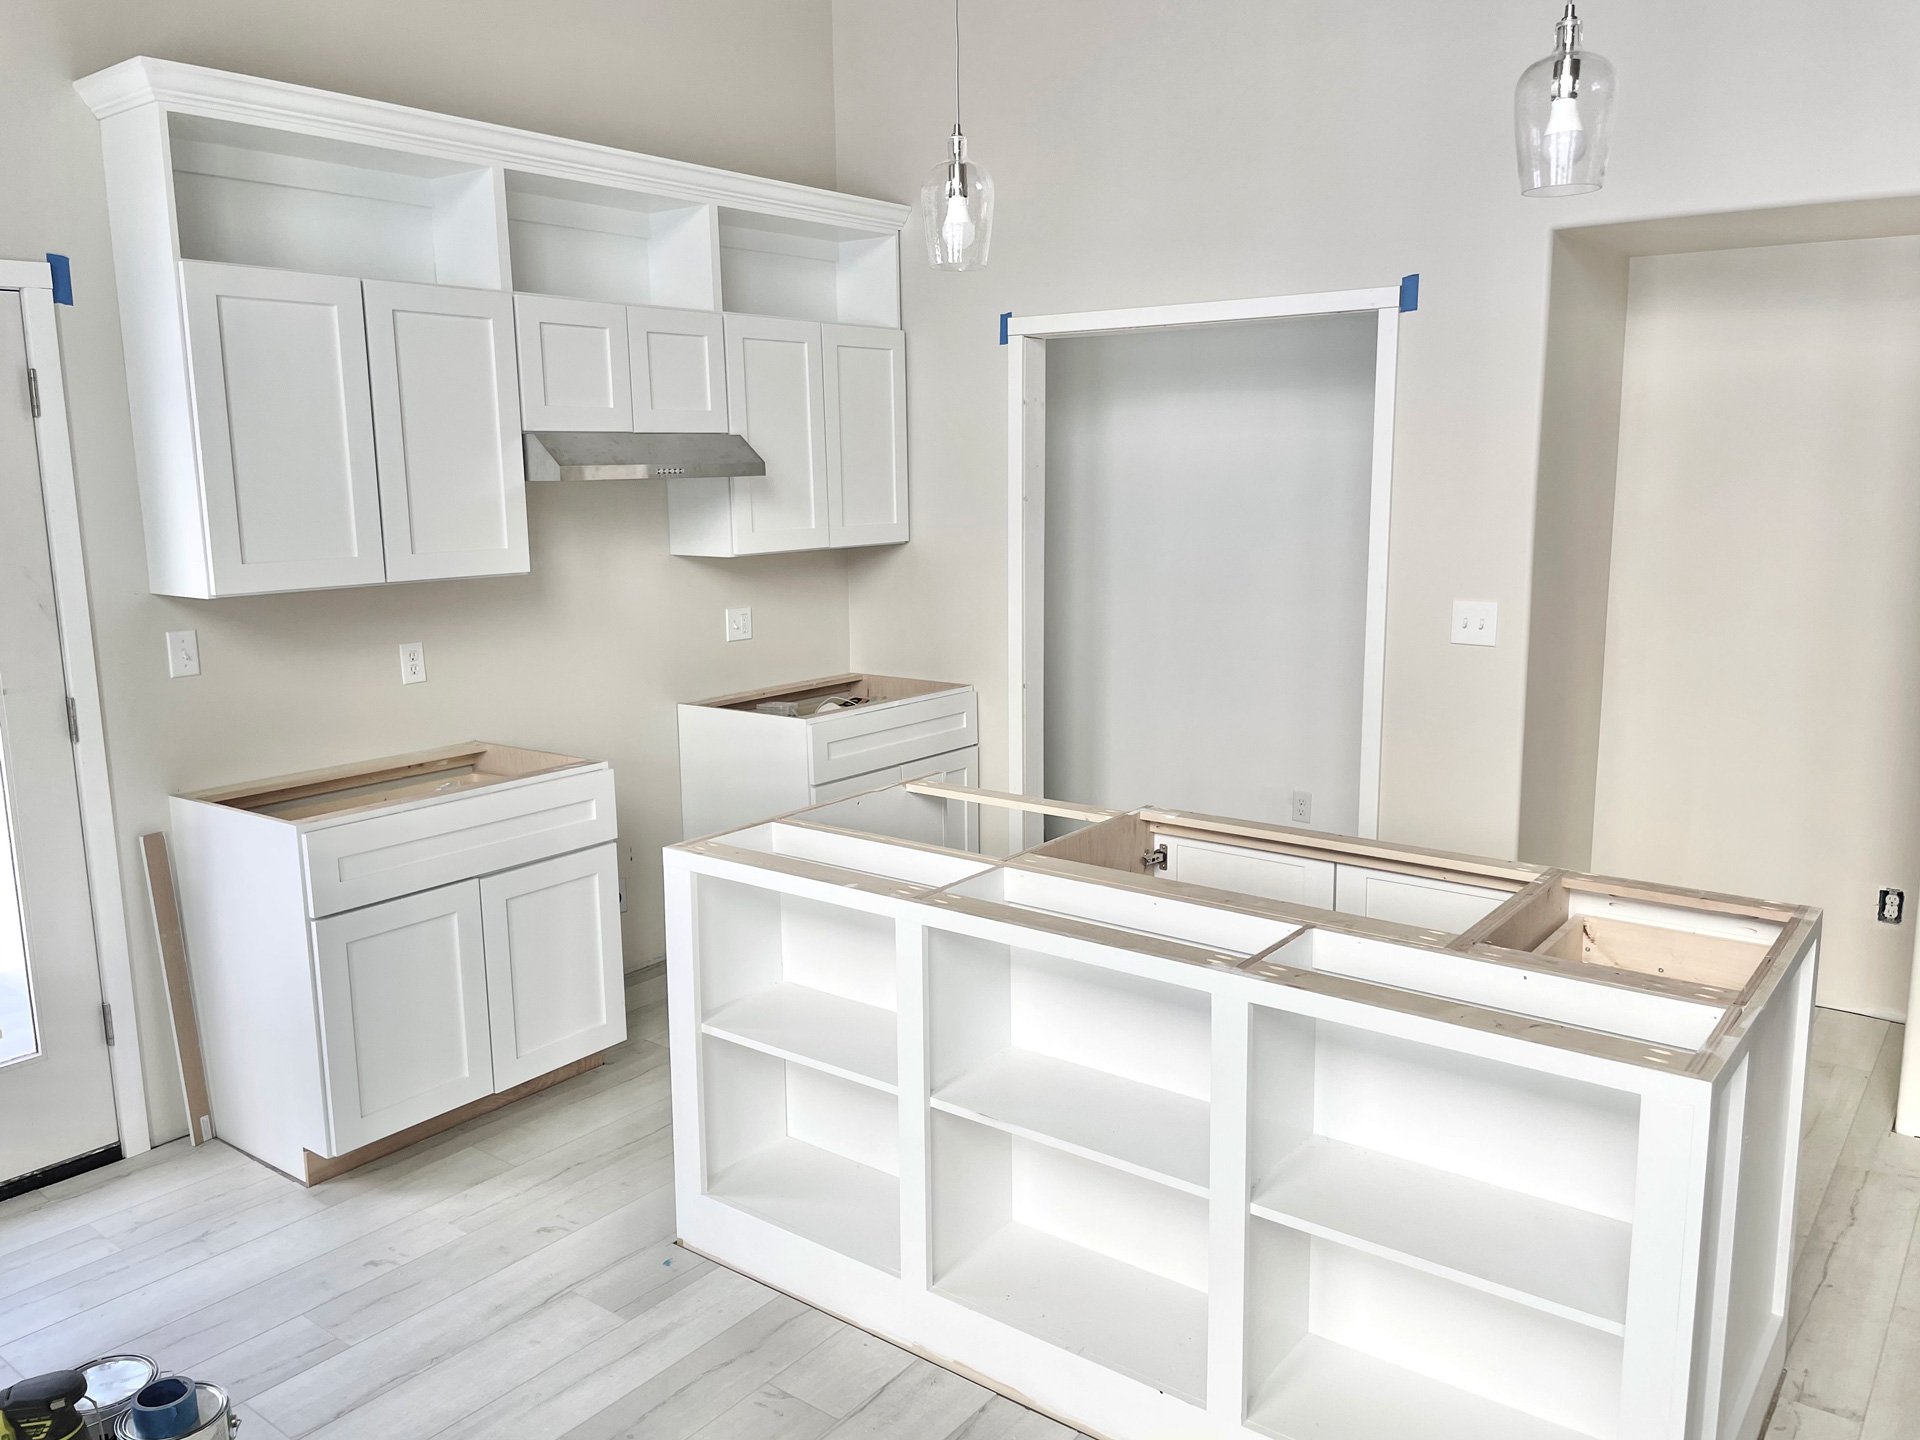 Cabin House Build Episode 18 DIY Kitchen Cabinets   Ana White